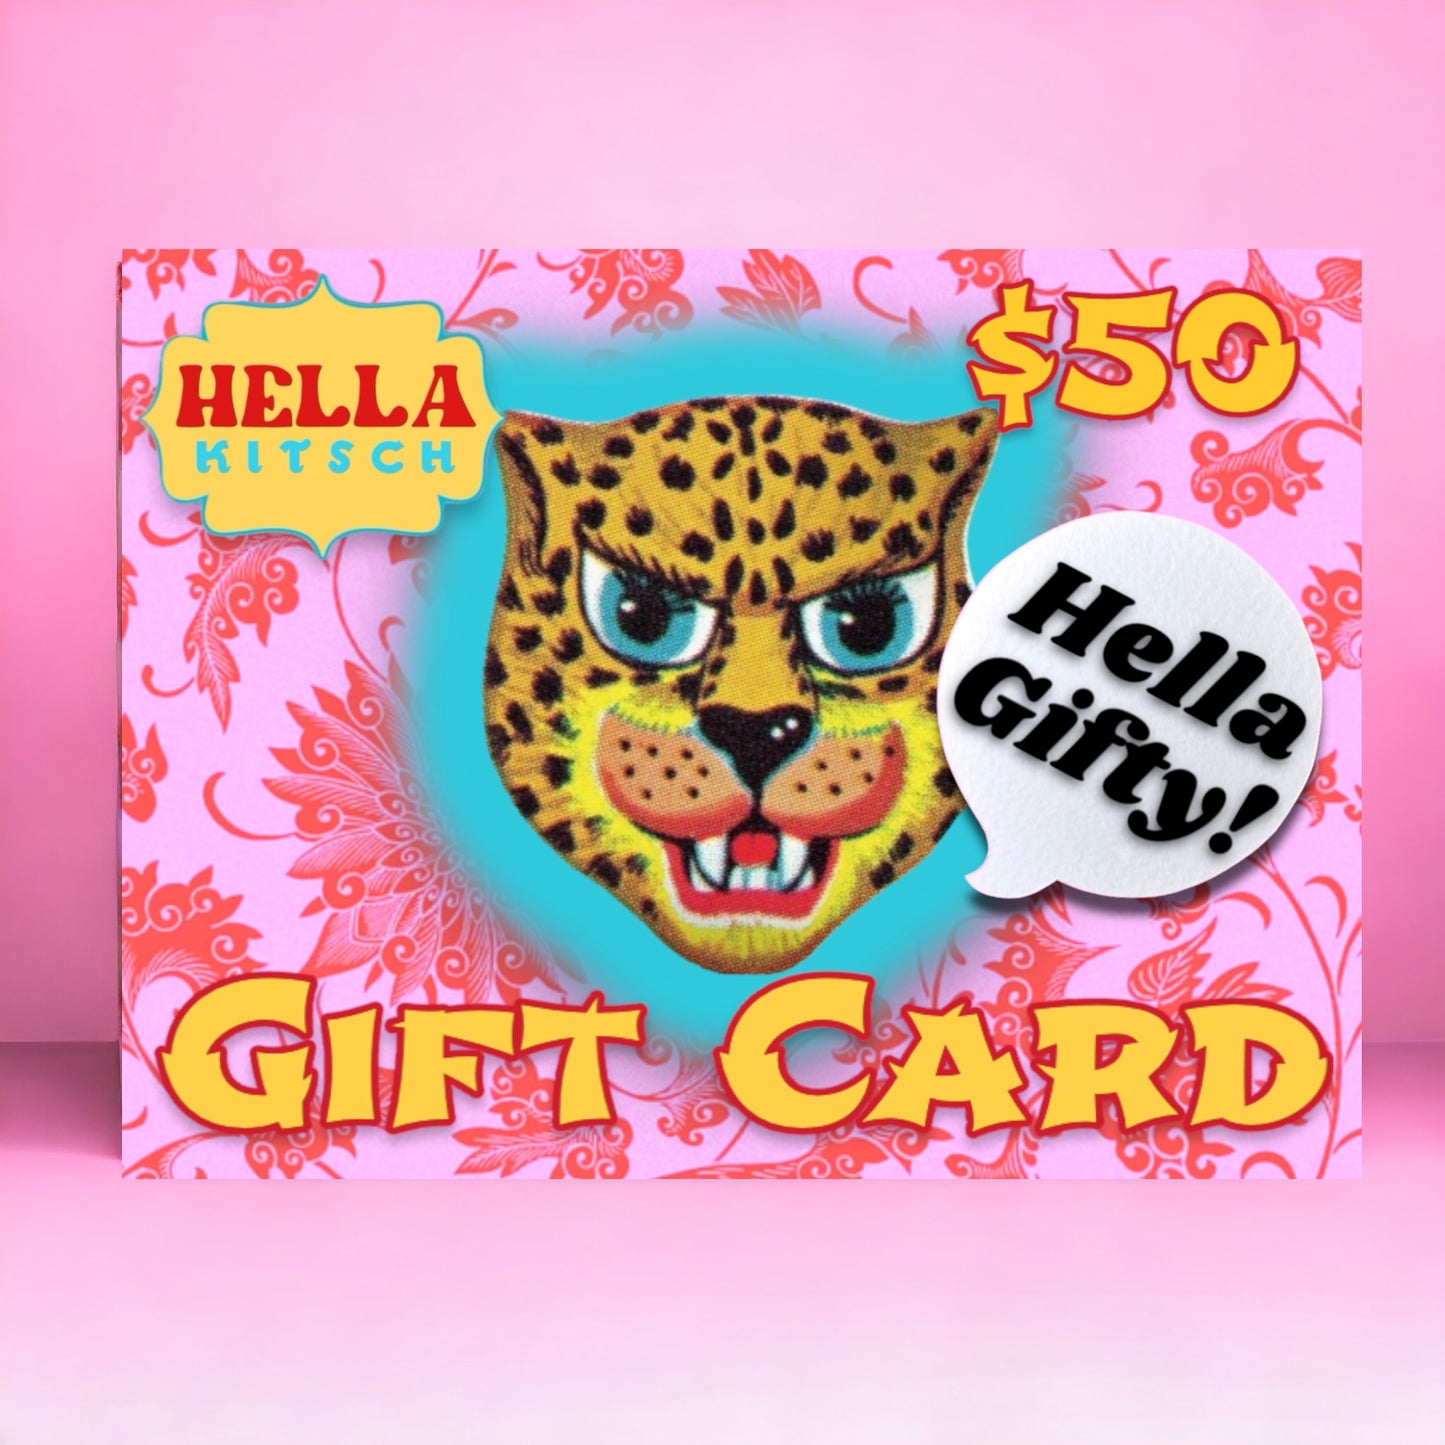 Hella Gifty - Gift Card!